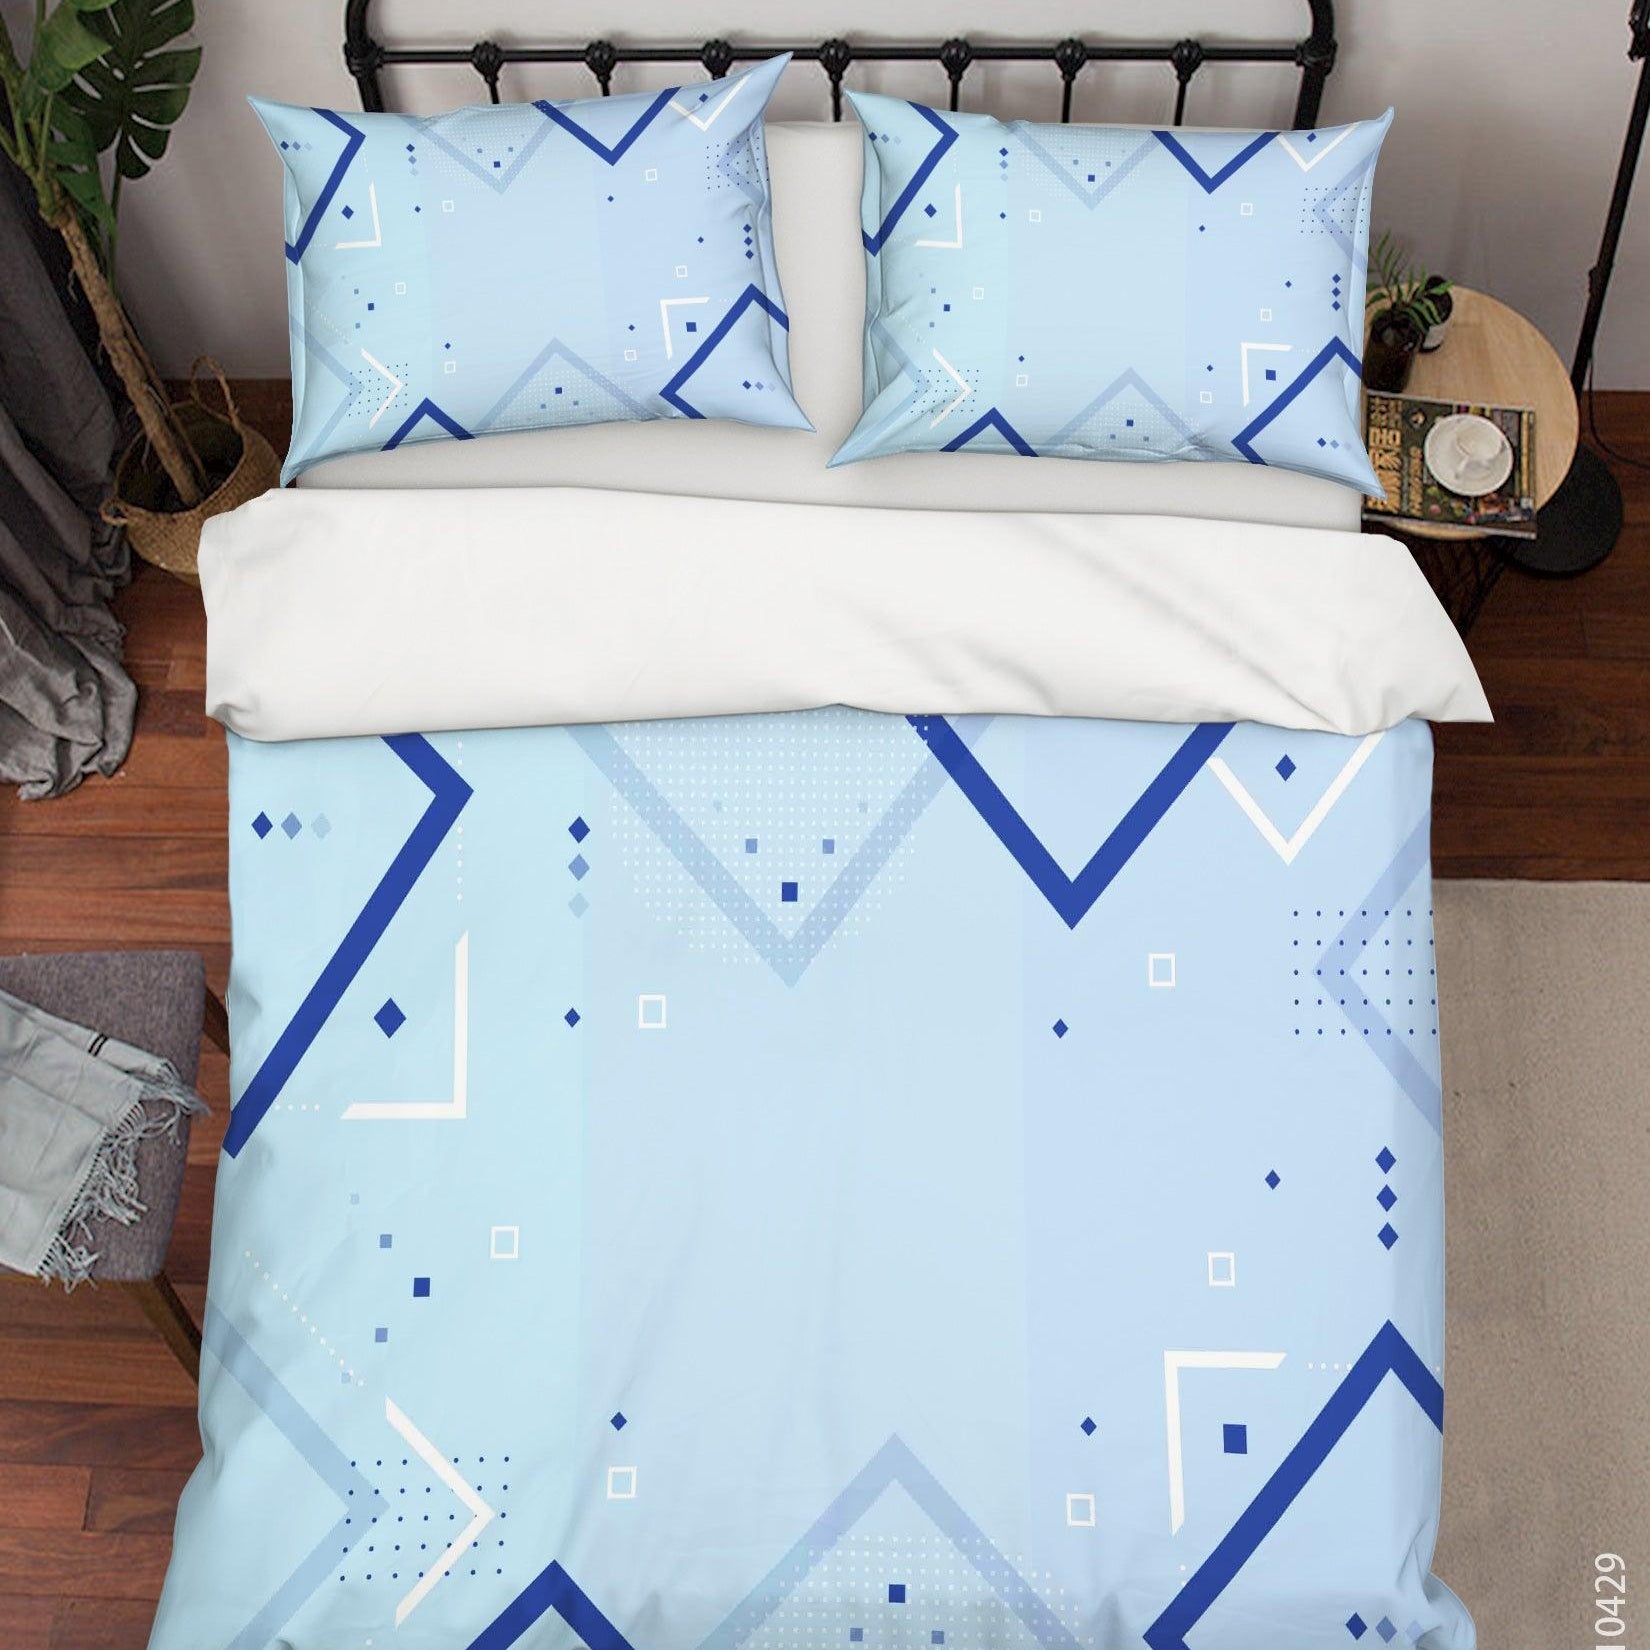 3D Abstract Blue Geometry Quilt Cover Set Bedding Set Duvet Cover Pillowcases 221- Jess Art Decoration